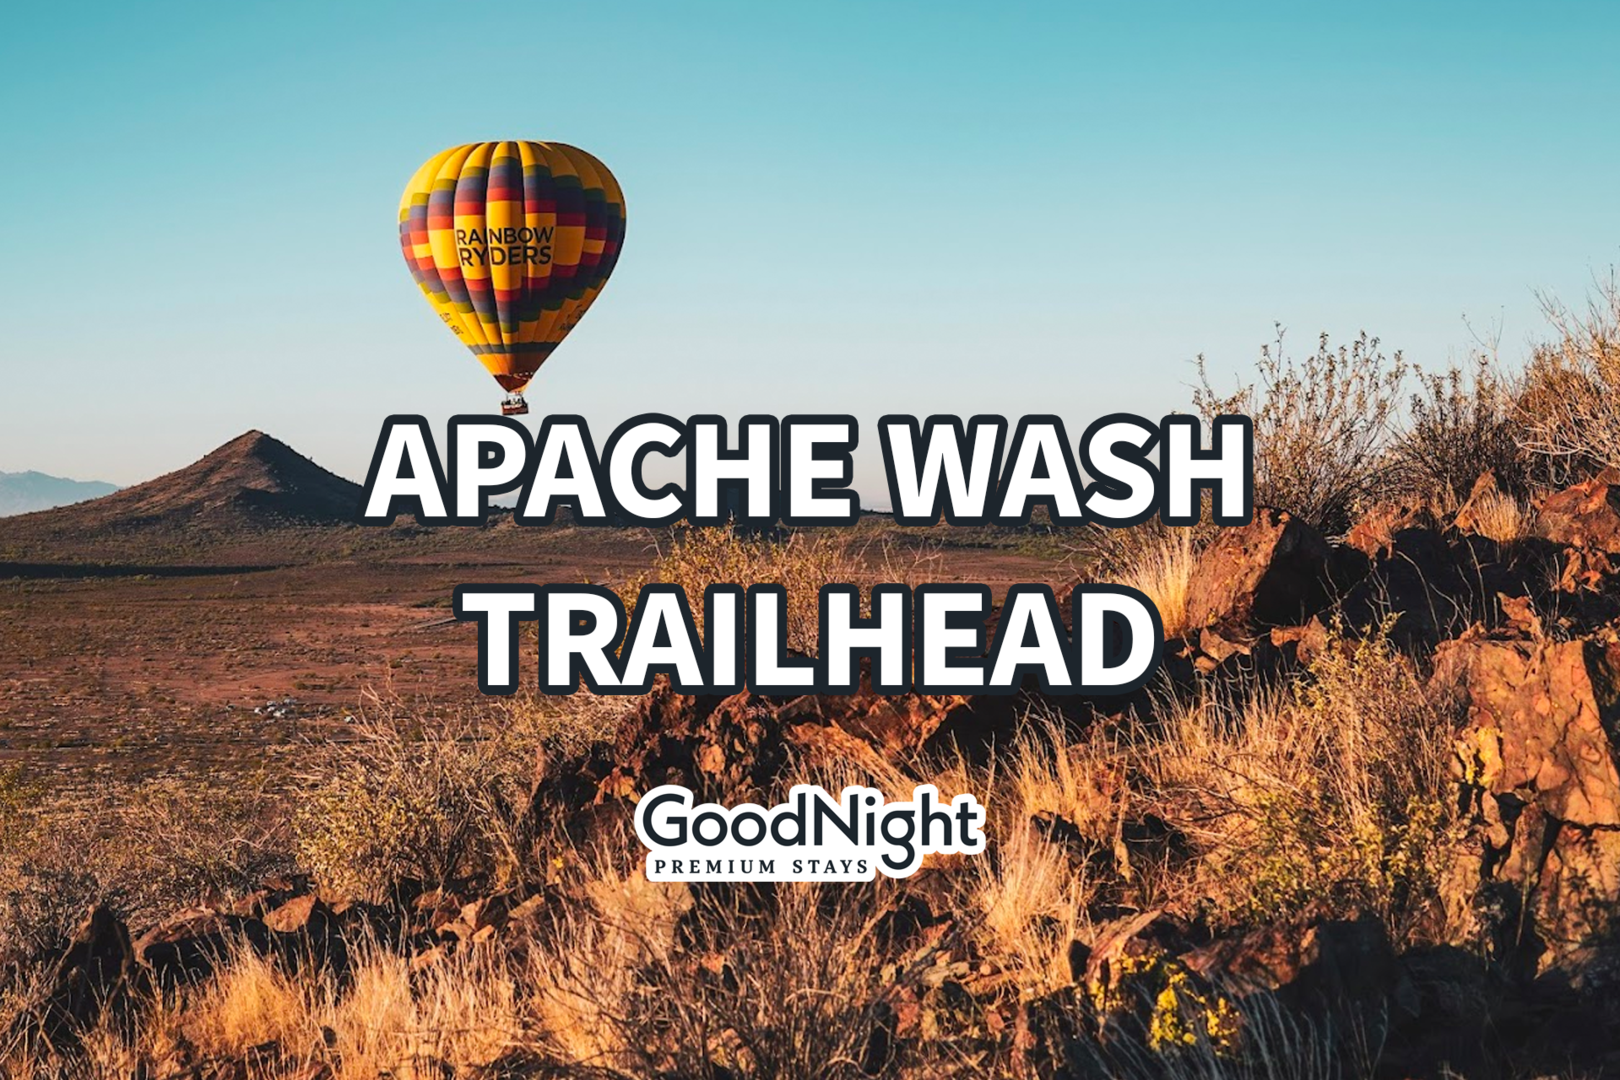 14 min to Apache Wash Trailhead